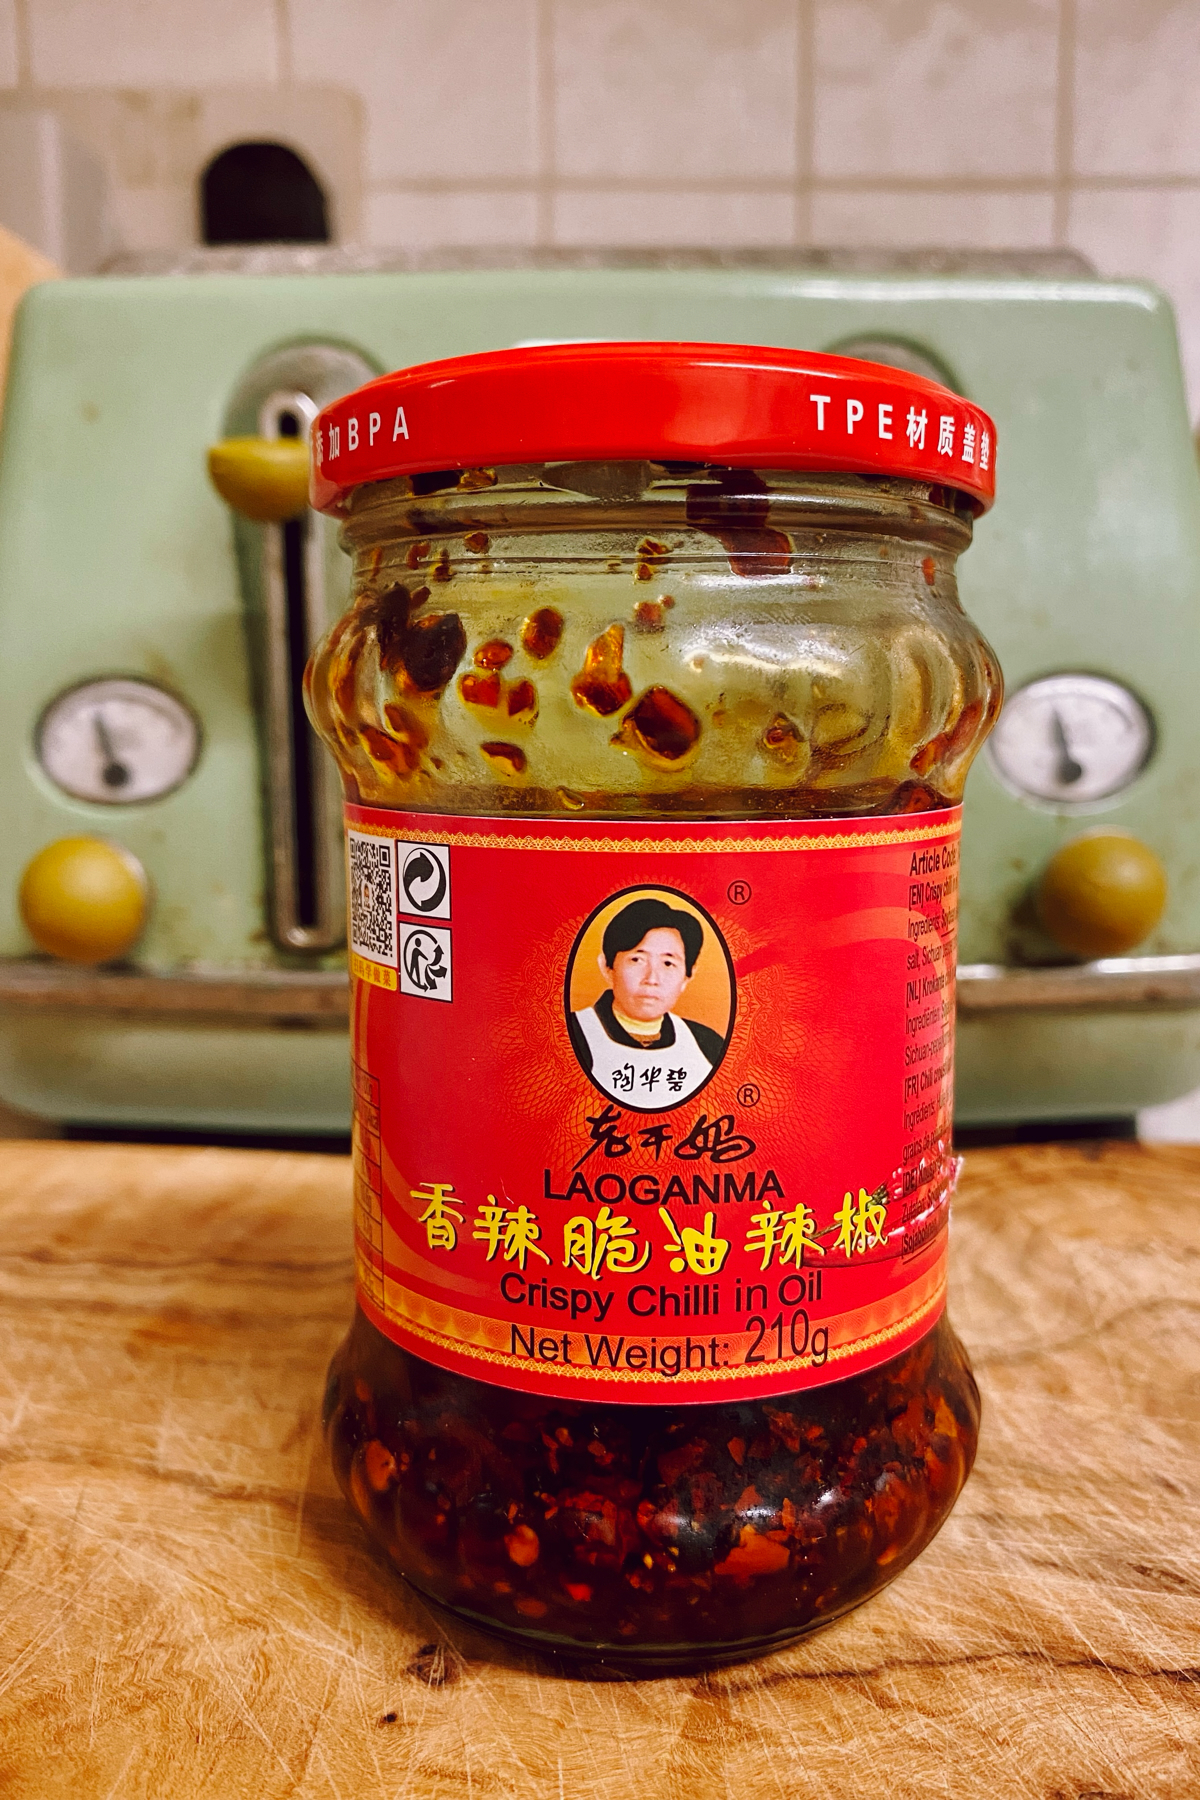 A jar of Lao Gan Ma Crispy Chilli in Oil on a kitchen counter.